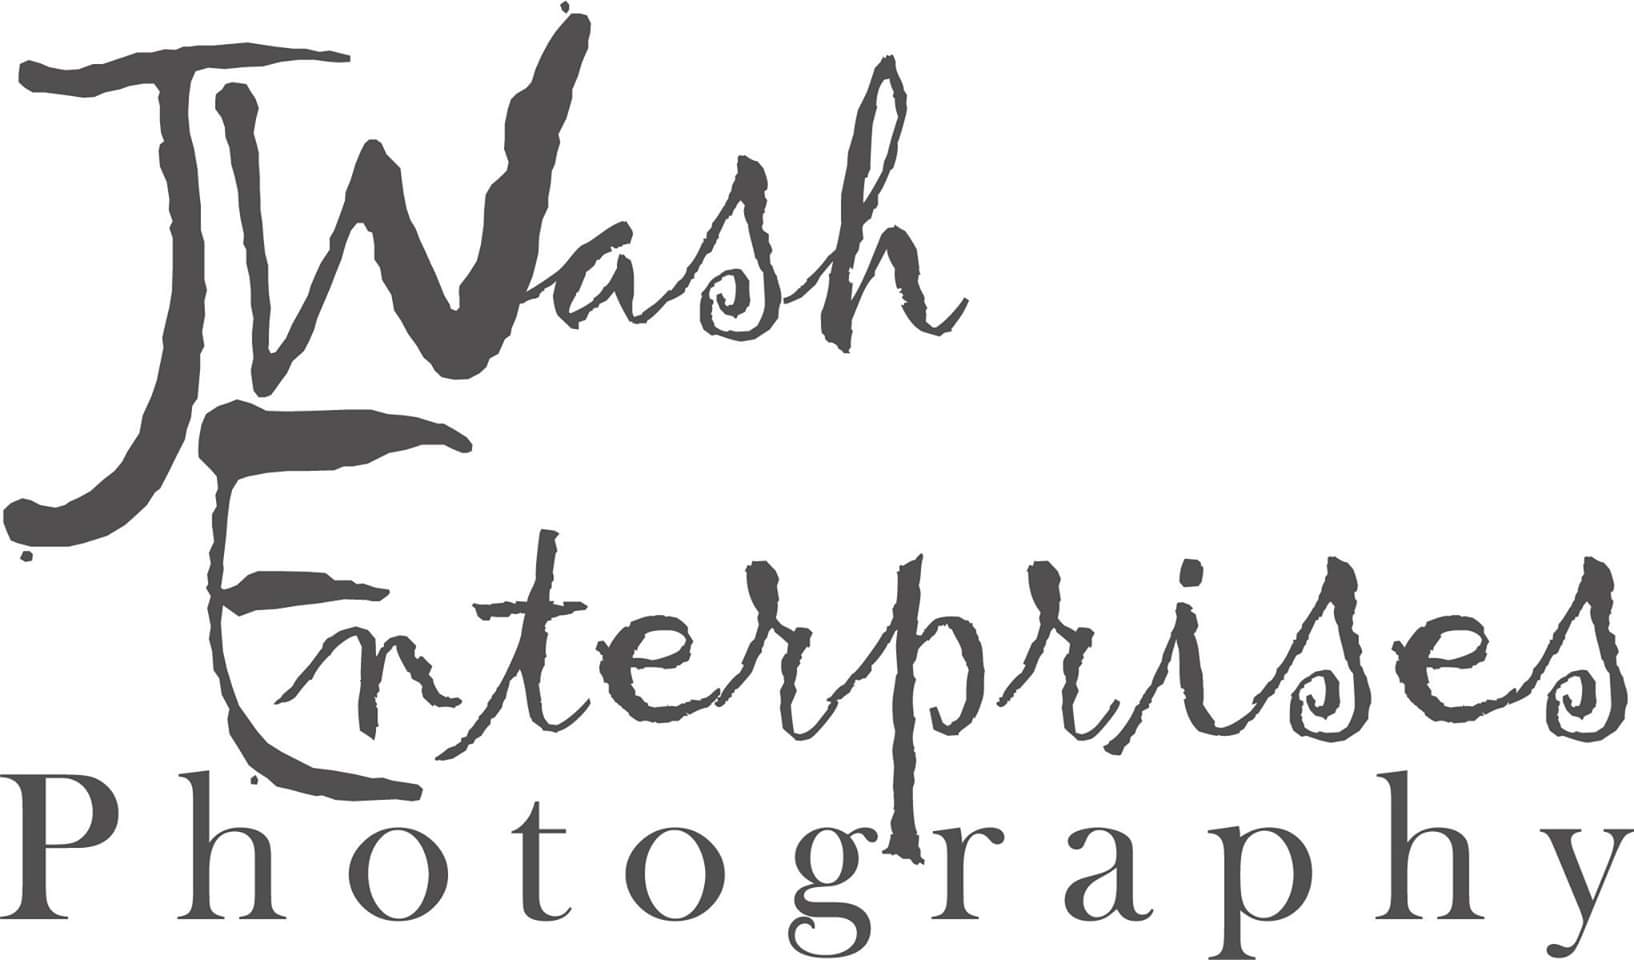 Jwash Enterprises